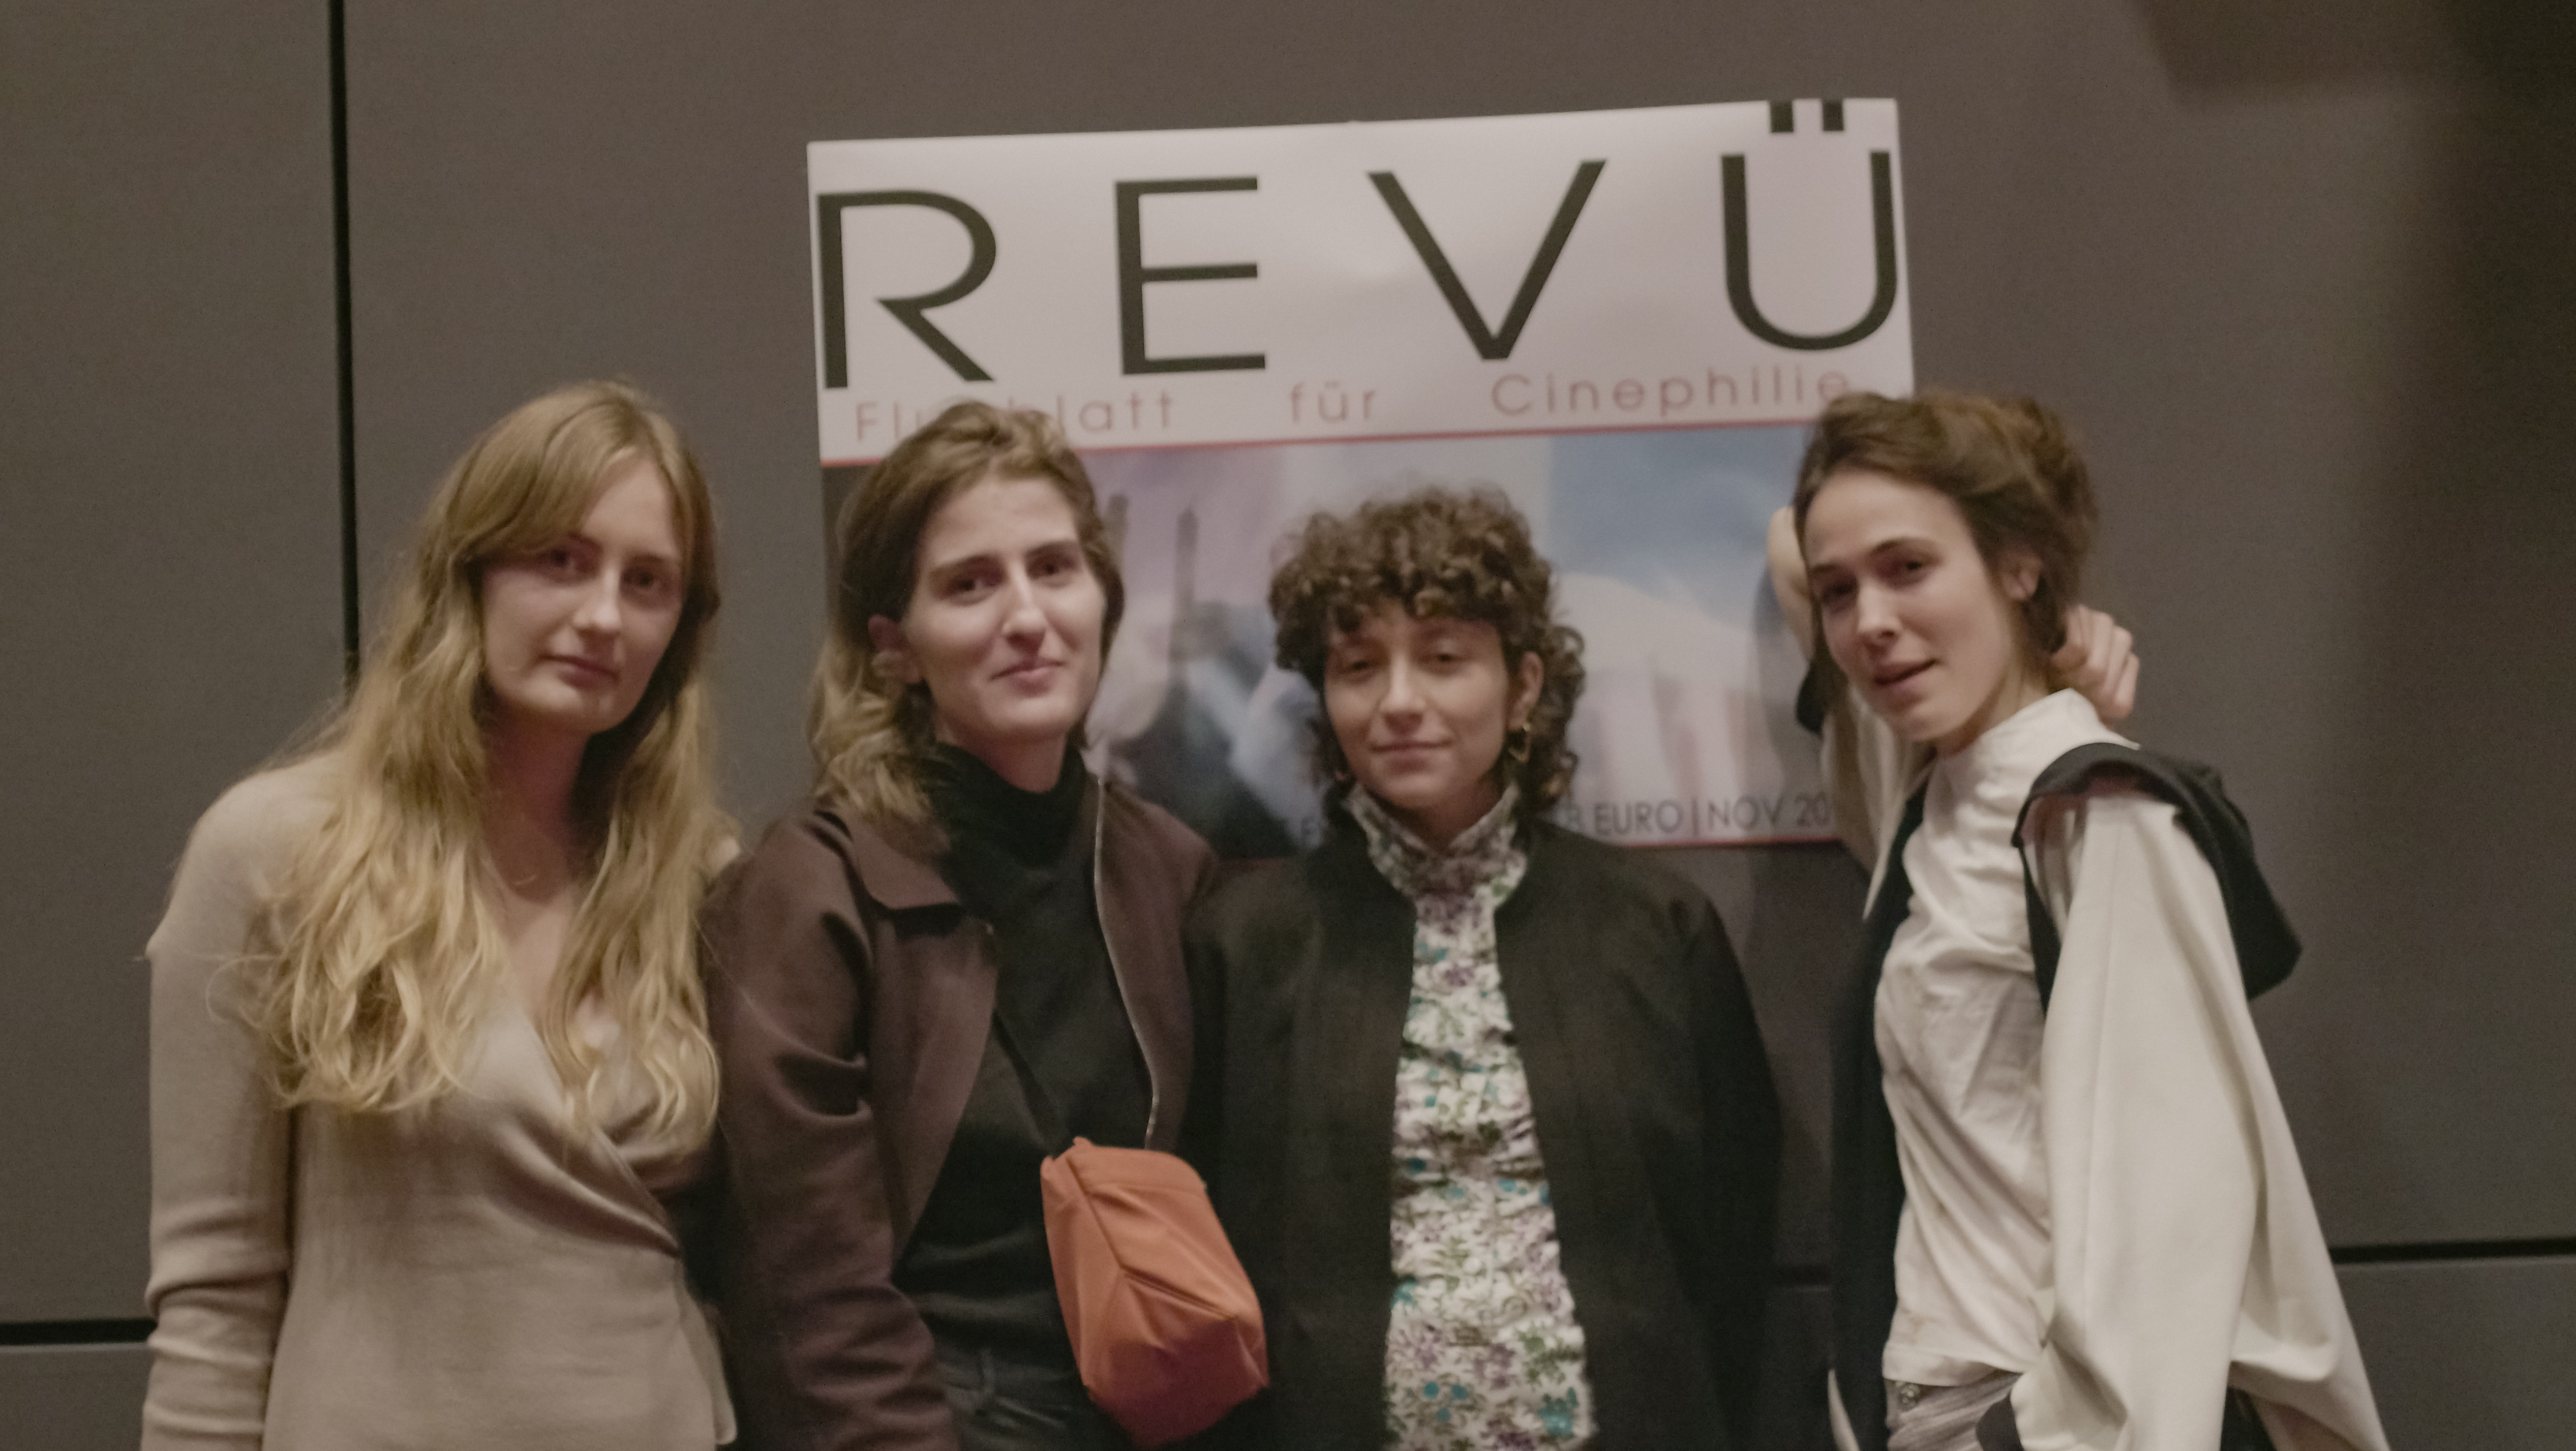 Das Team: Johanna Seggelke, Carlotta Wachotsch, Lili Avar & Sarah Daisy Ellersdorfer; © REVÜ